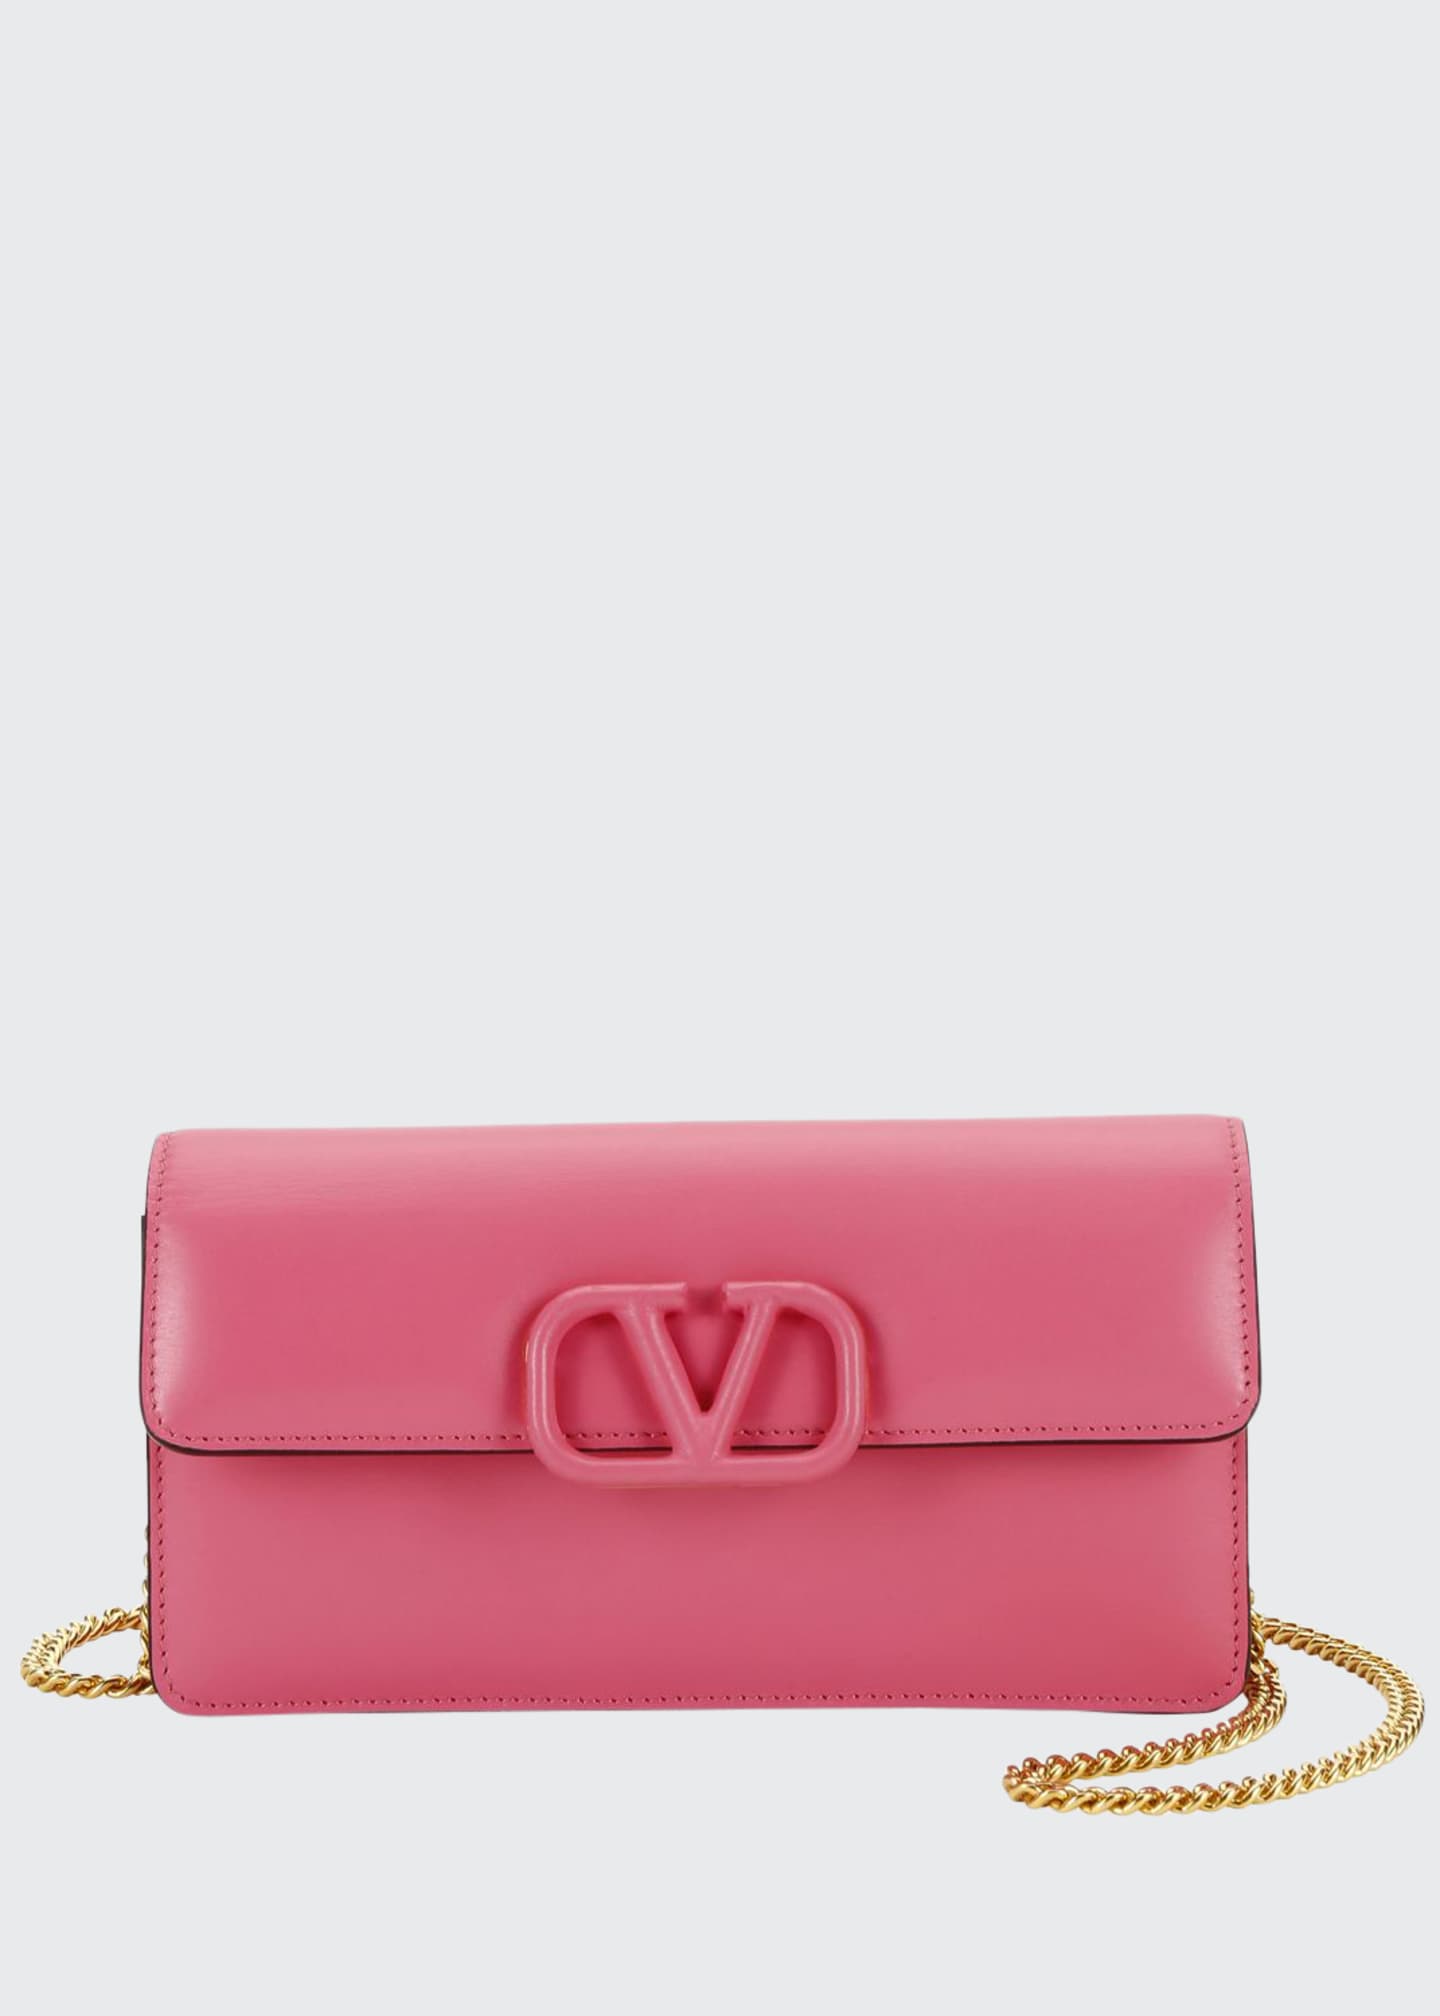 Givenchy Pandora Long Double-Zip Wristlet Wallet, Light Pink